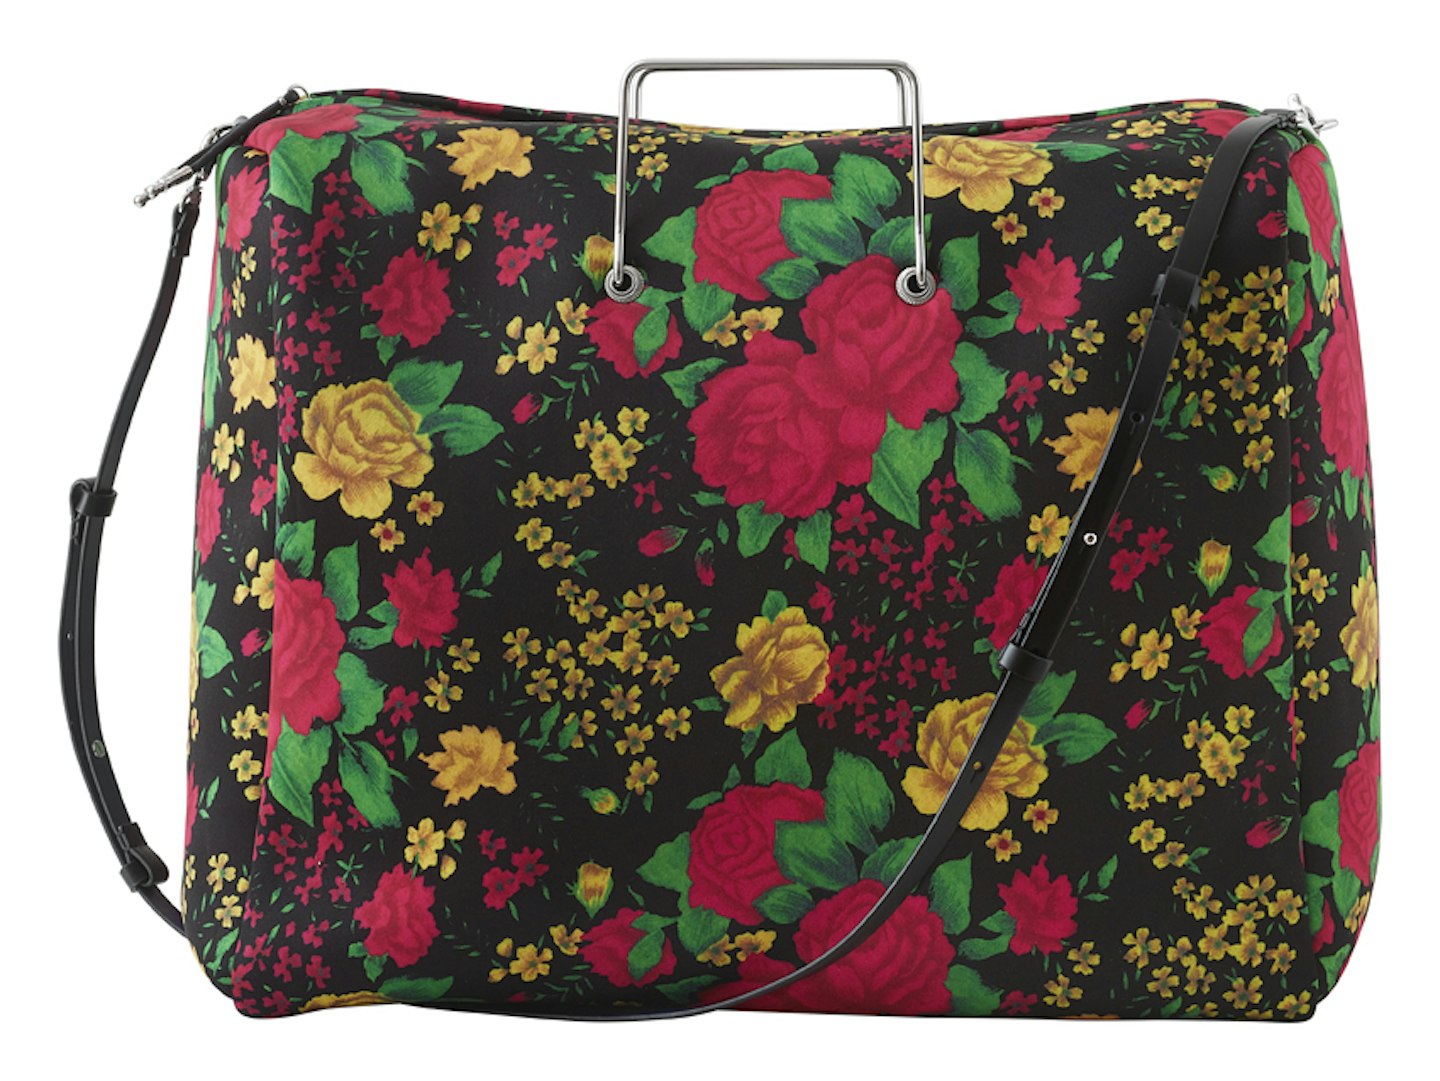 TOGA ARCHIVES x H&M, Floral Bag, £69.99